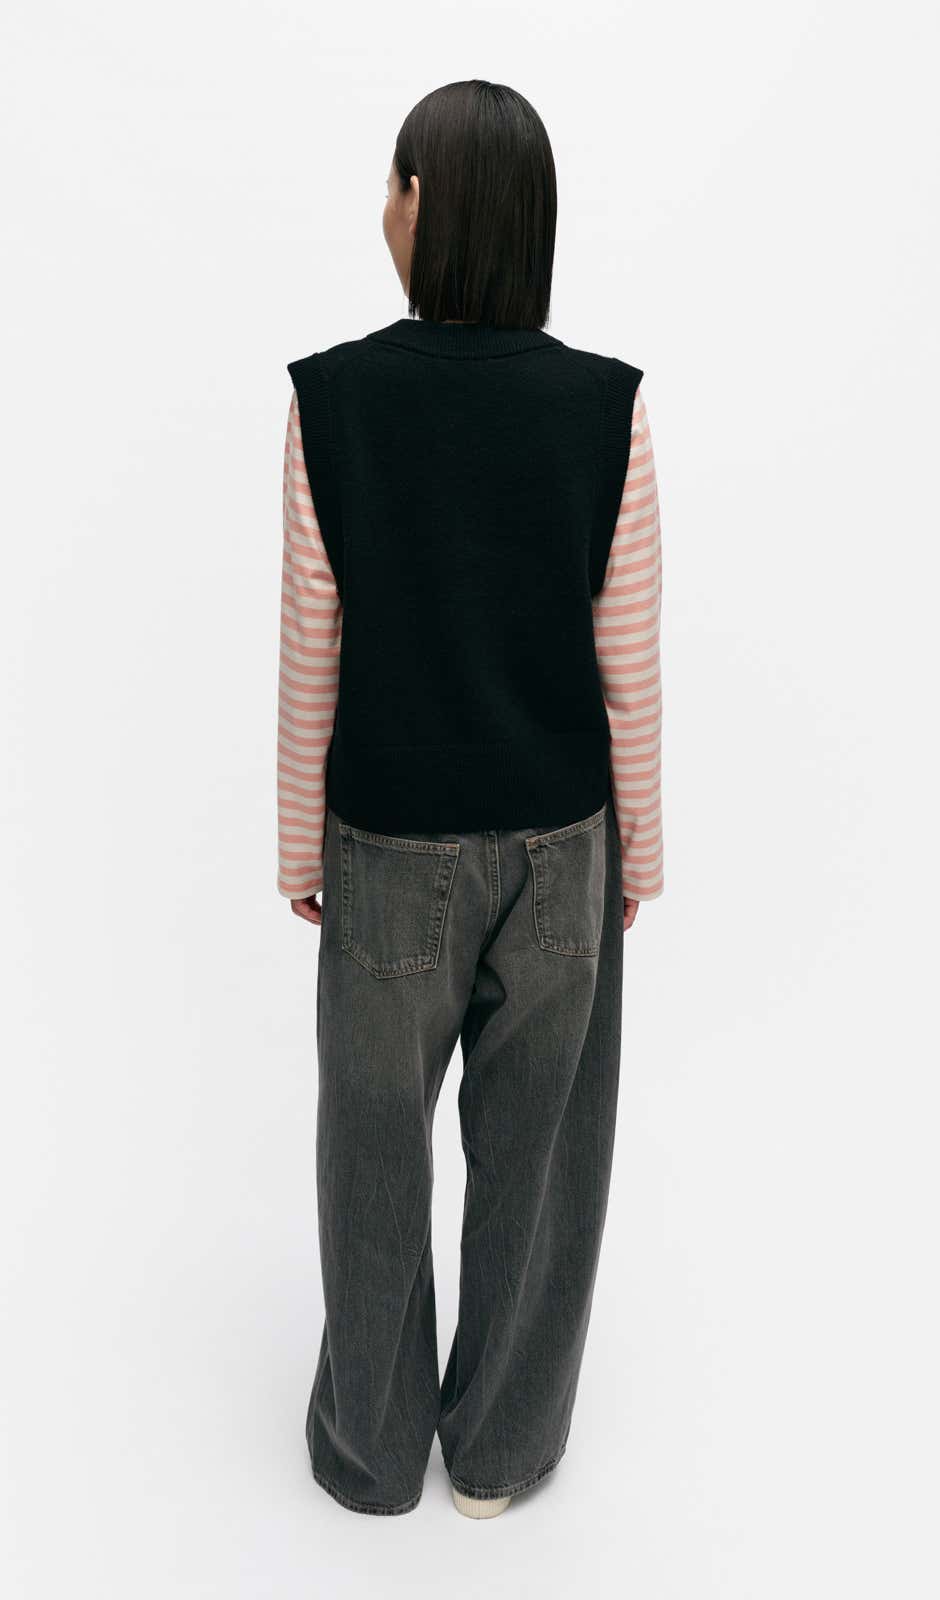 Eir Unikko Placement vest – responsible wool